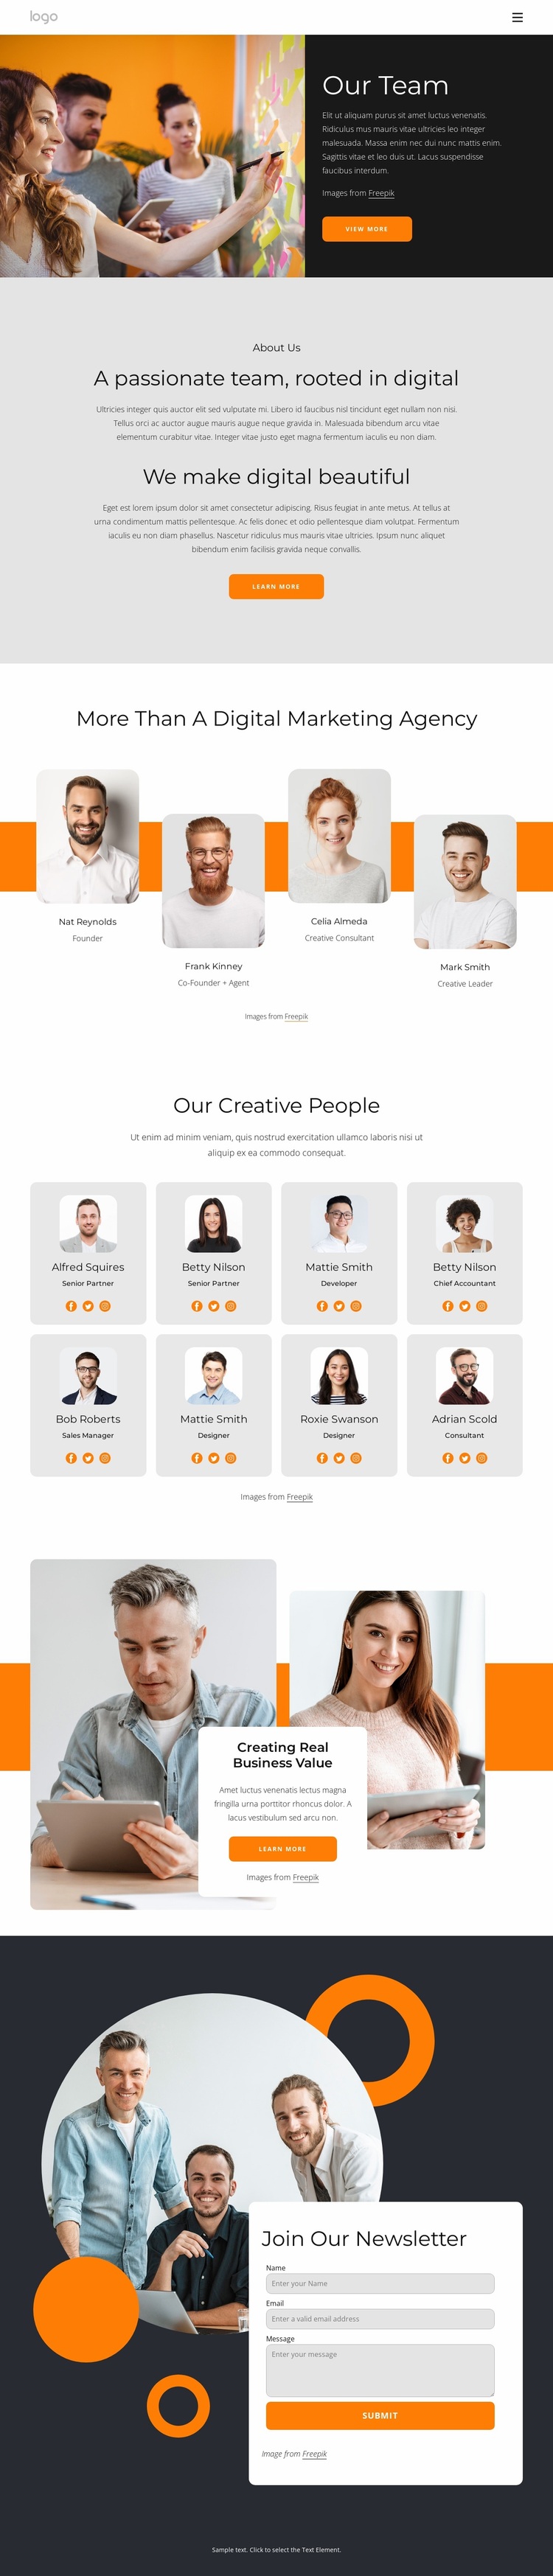 We are creative people with big dreams Website Design